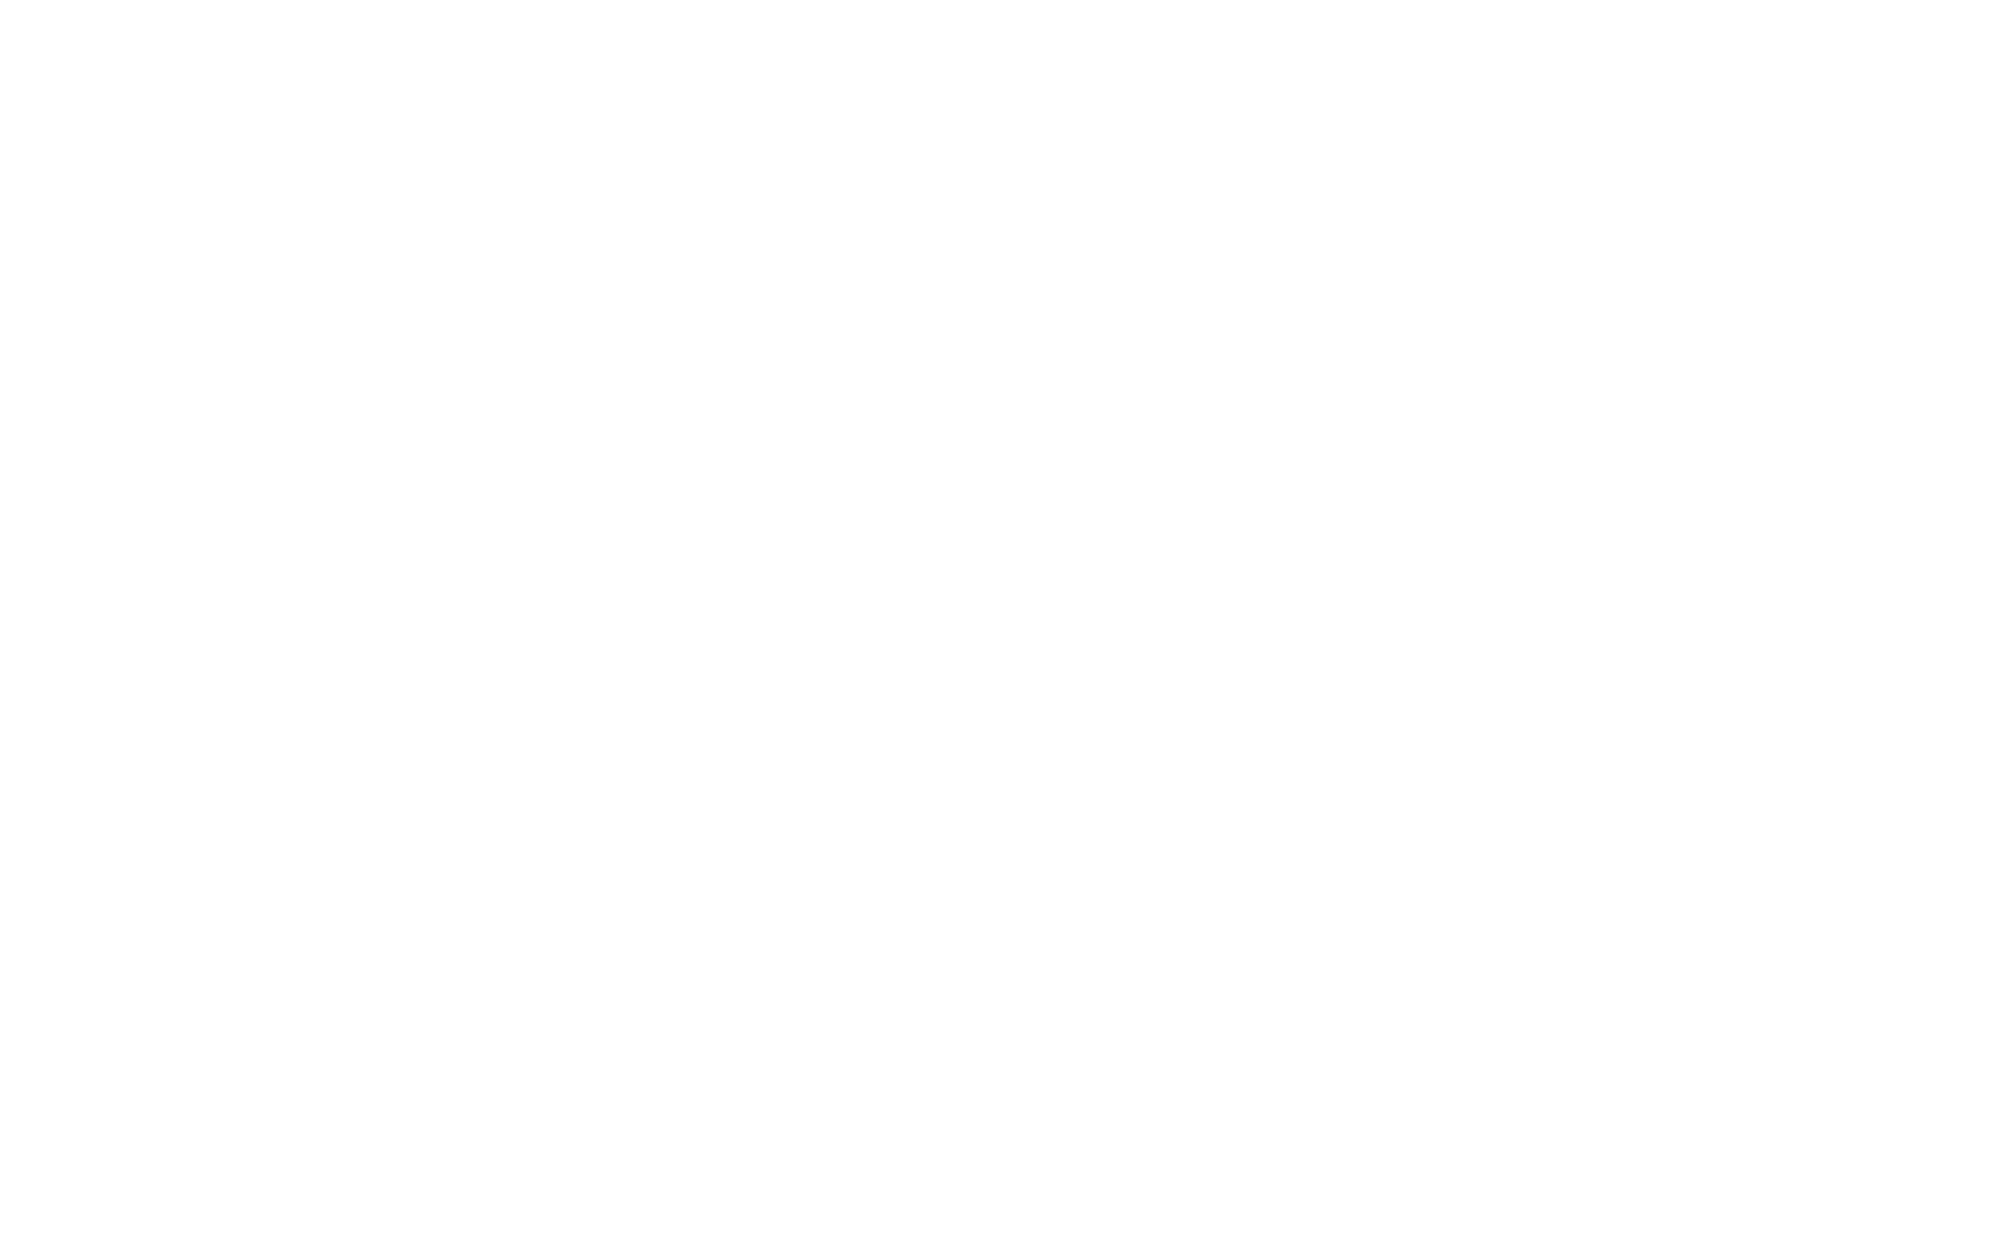 Phnxman icon